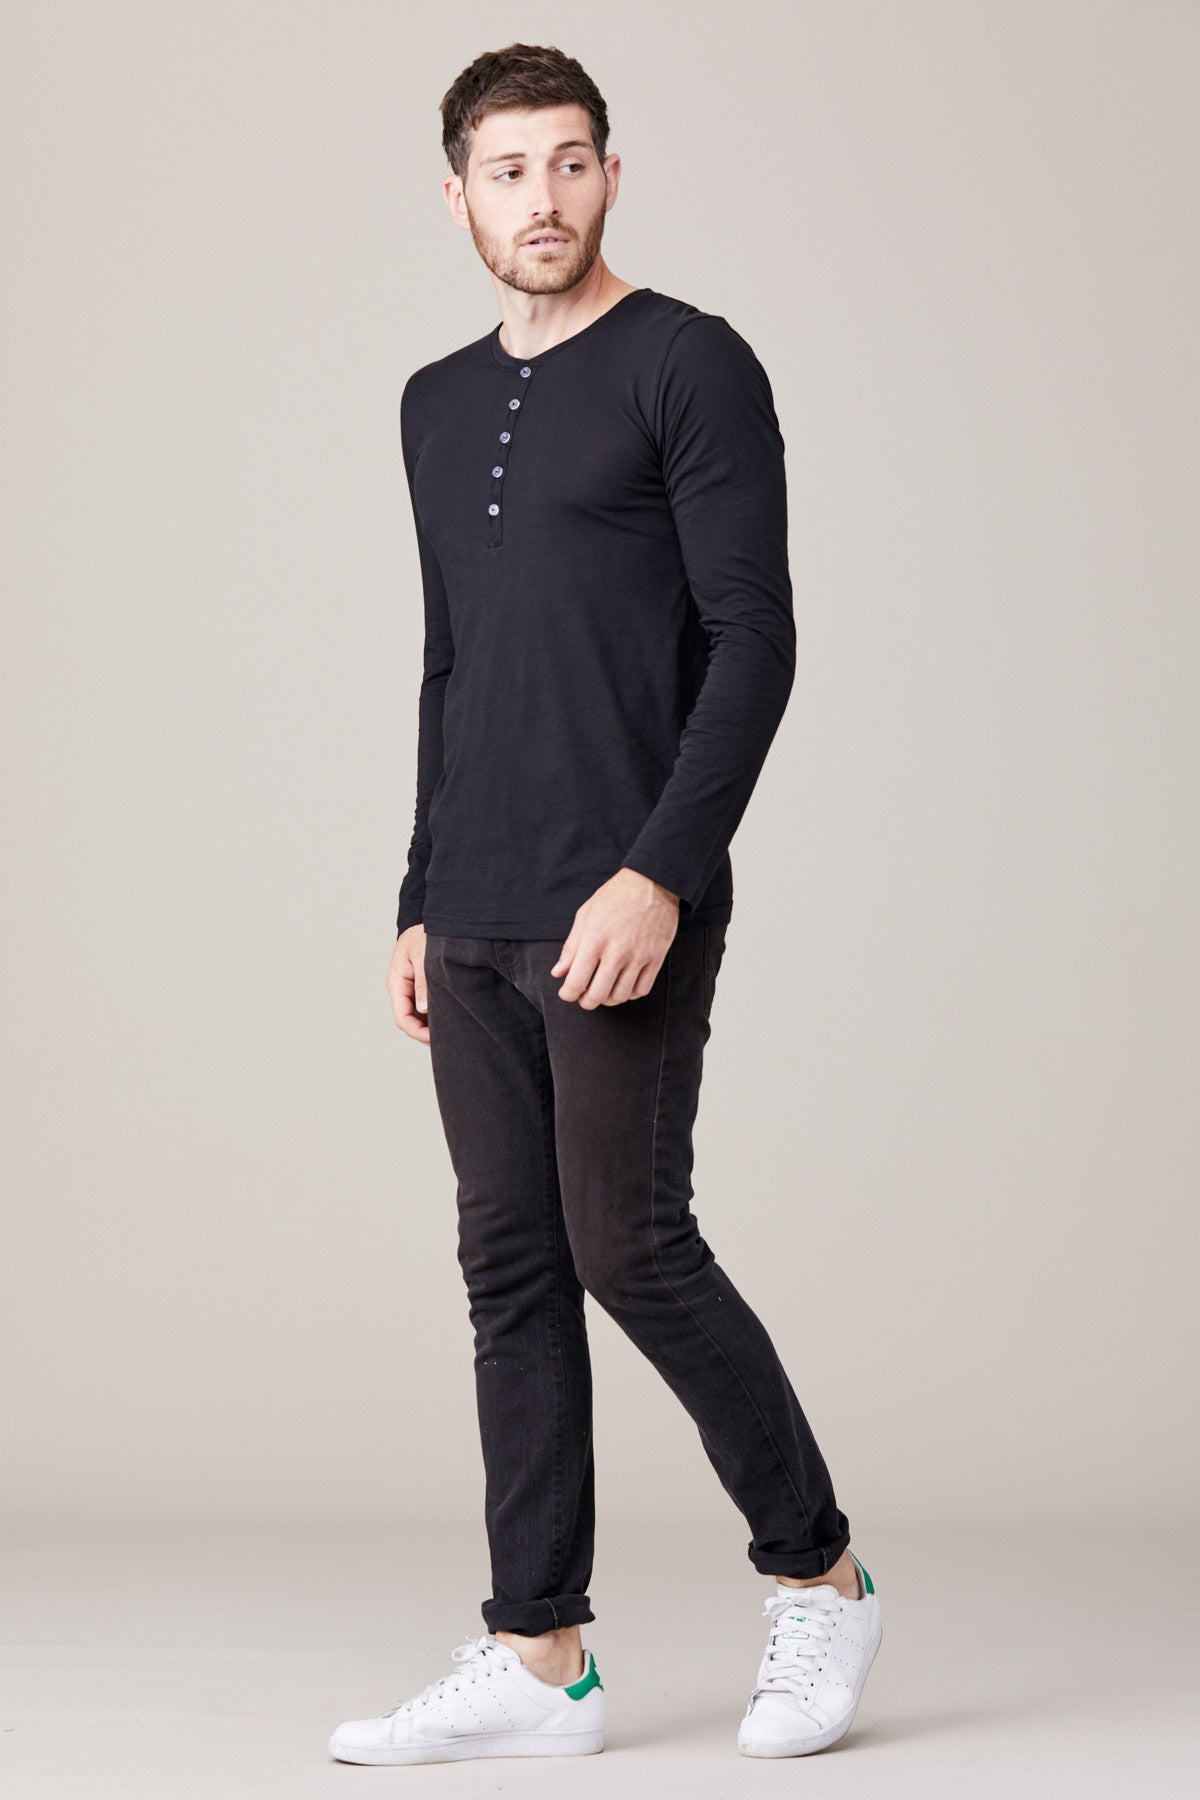 Men's Men's Long Sleeve Button Henley - Black, XL by LNA Clothing